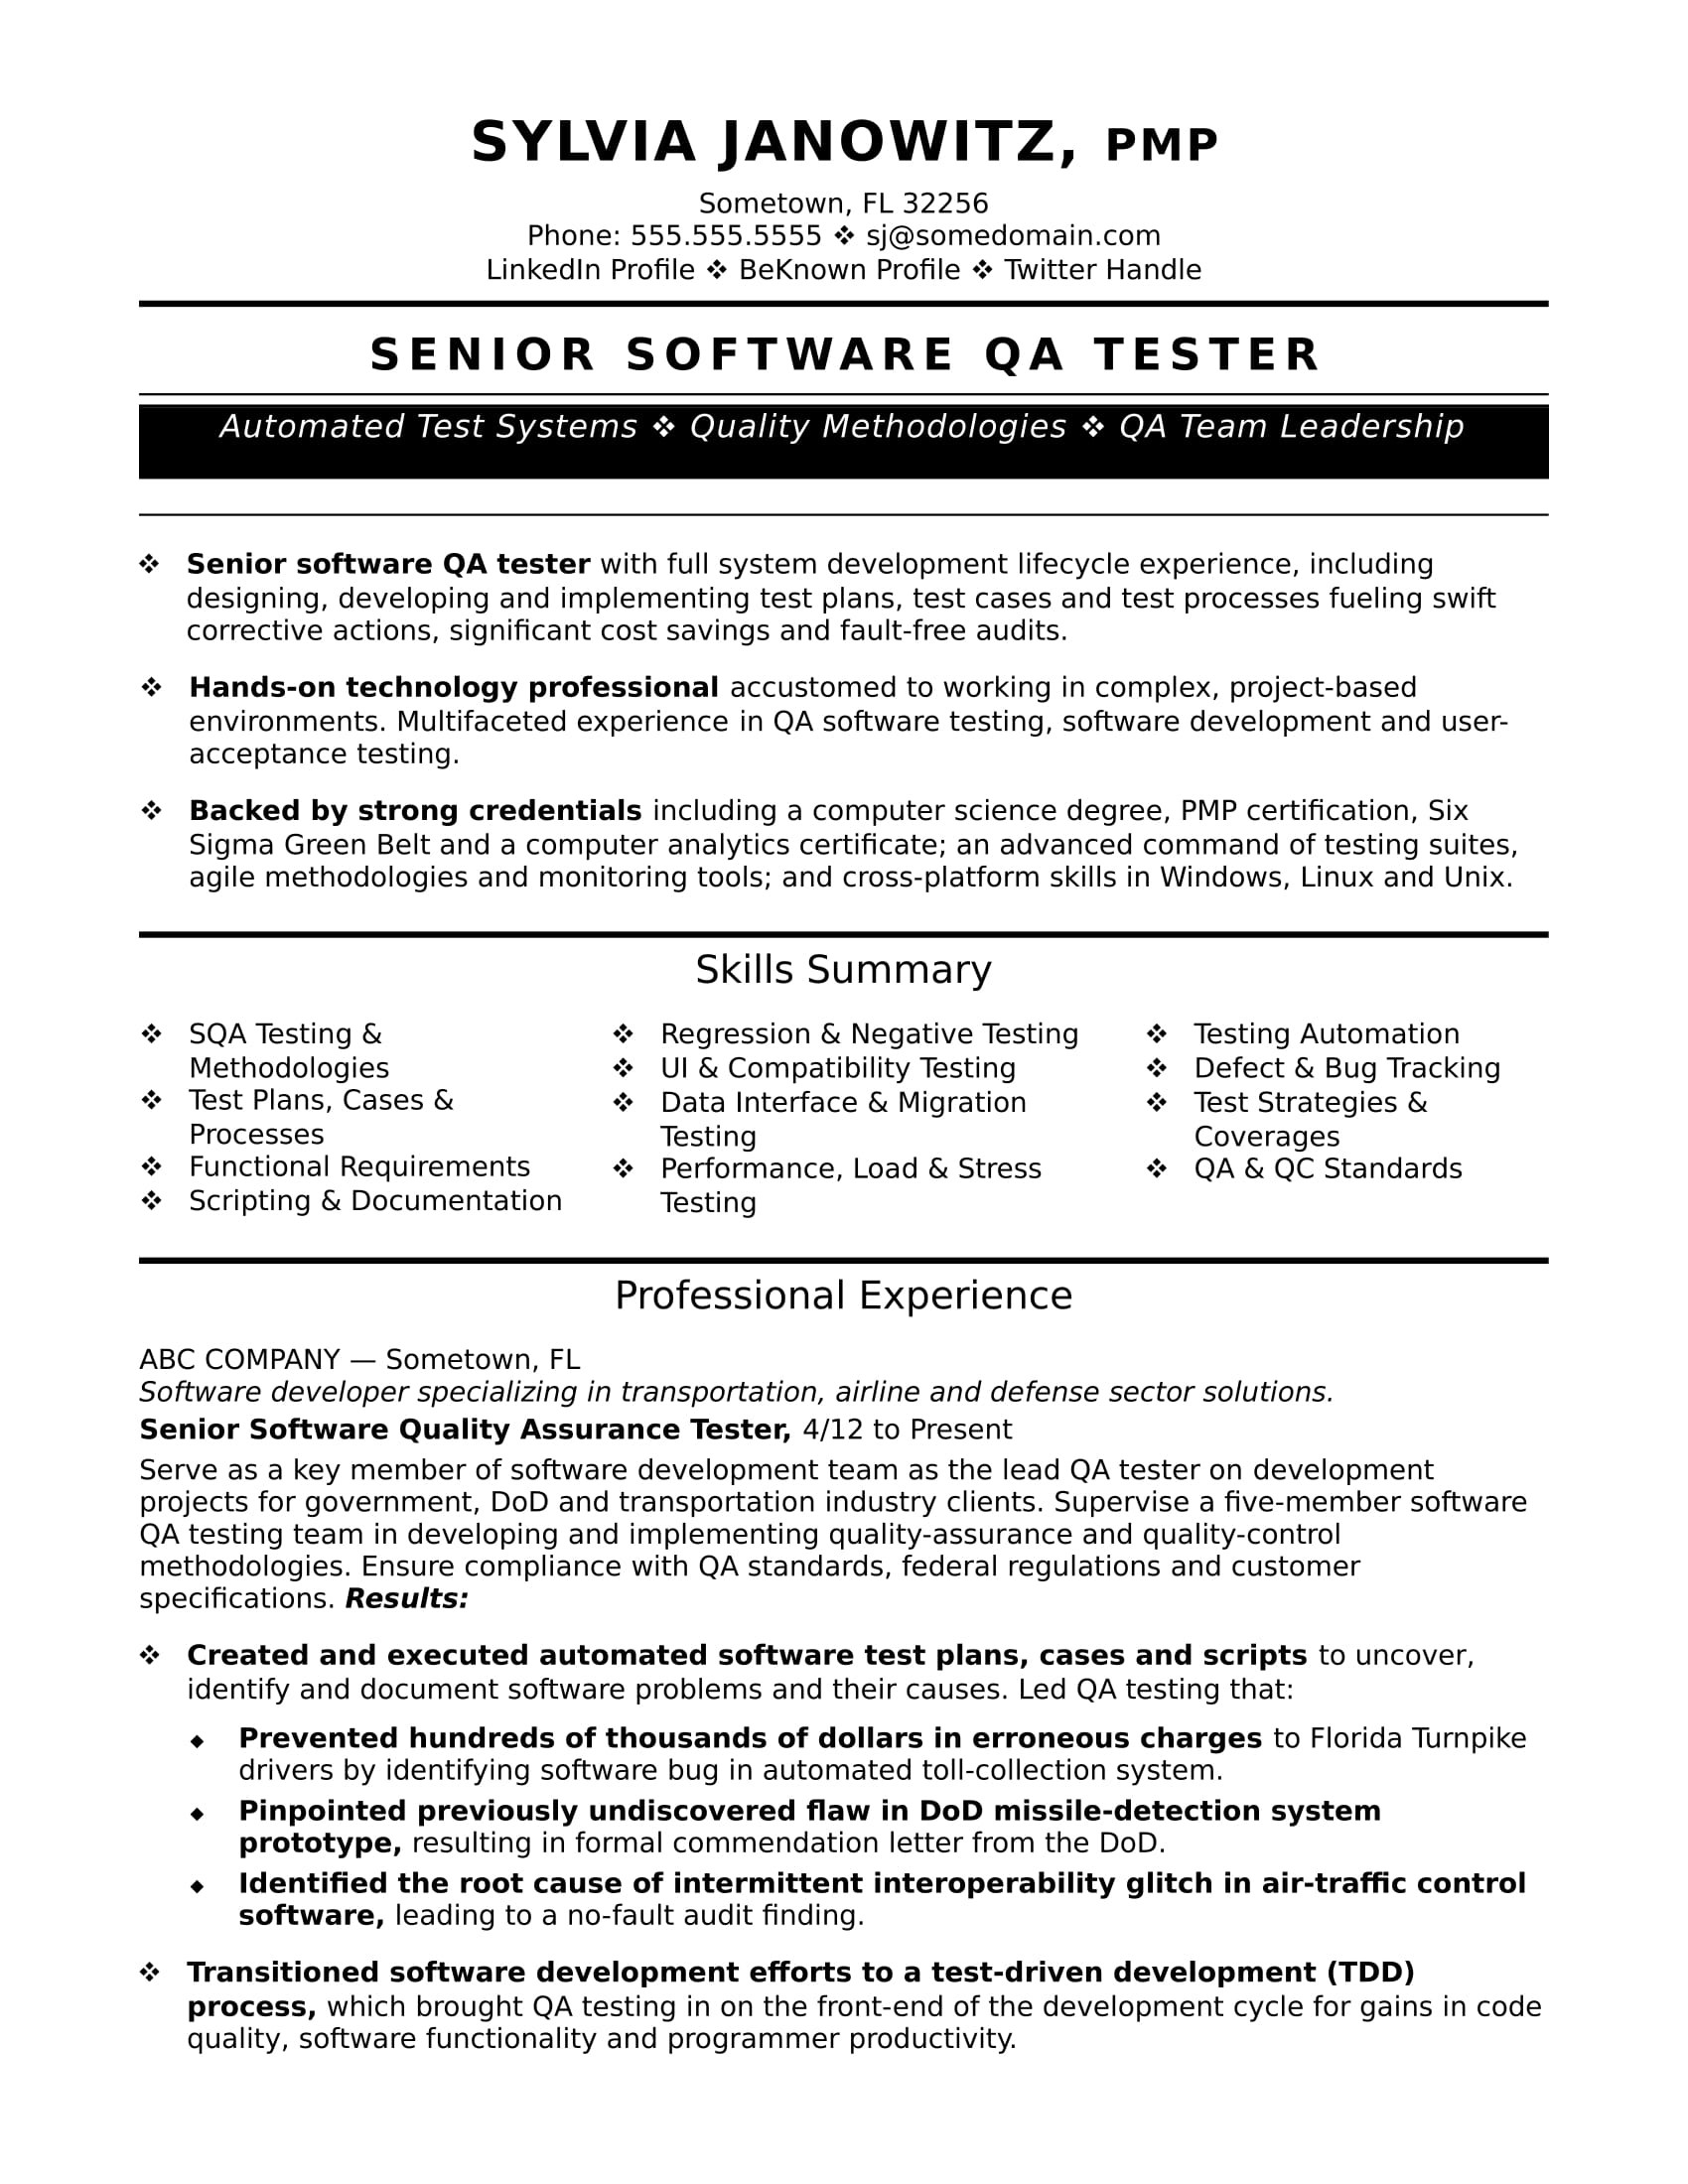 Entry Level Qa Tester Resume Sample with Projects Experienced Qa software Tester Resume Sample Monster.com